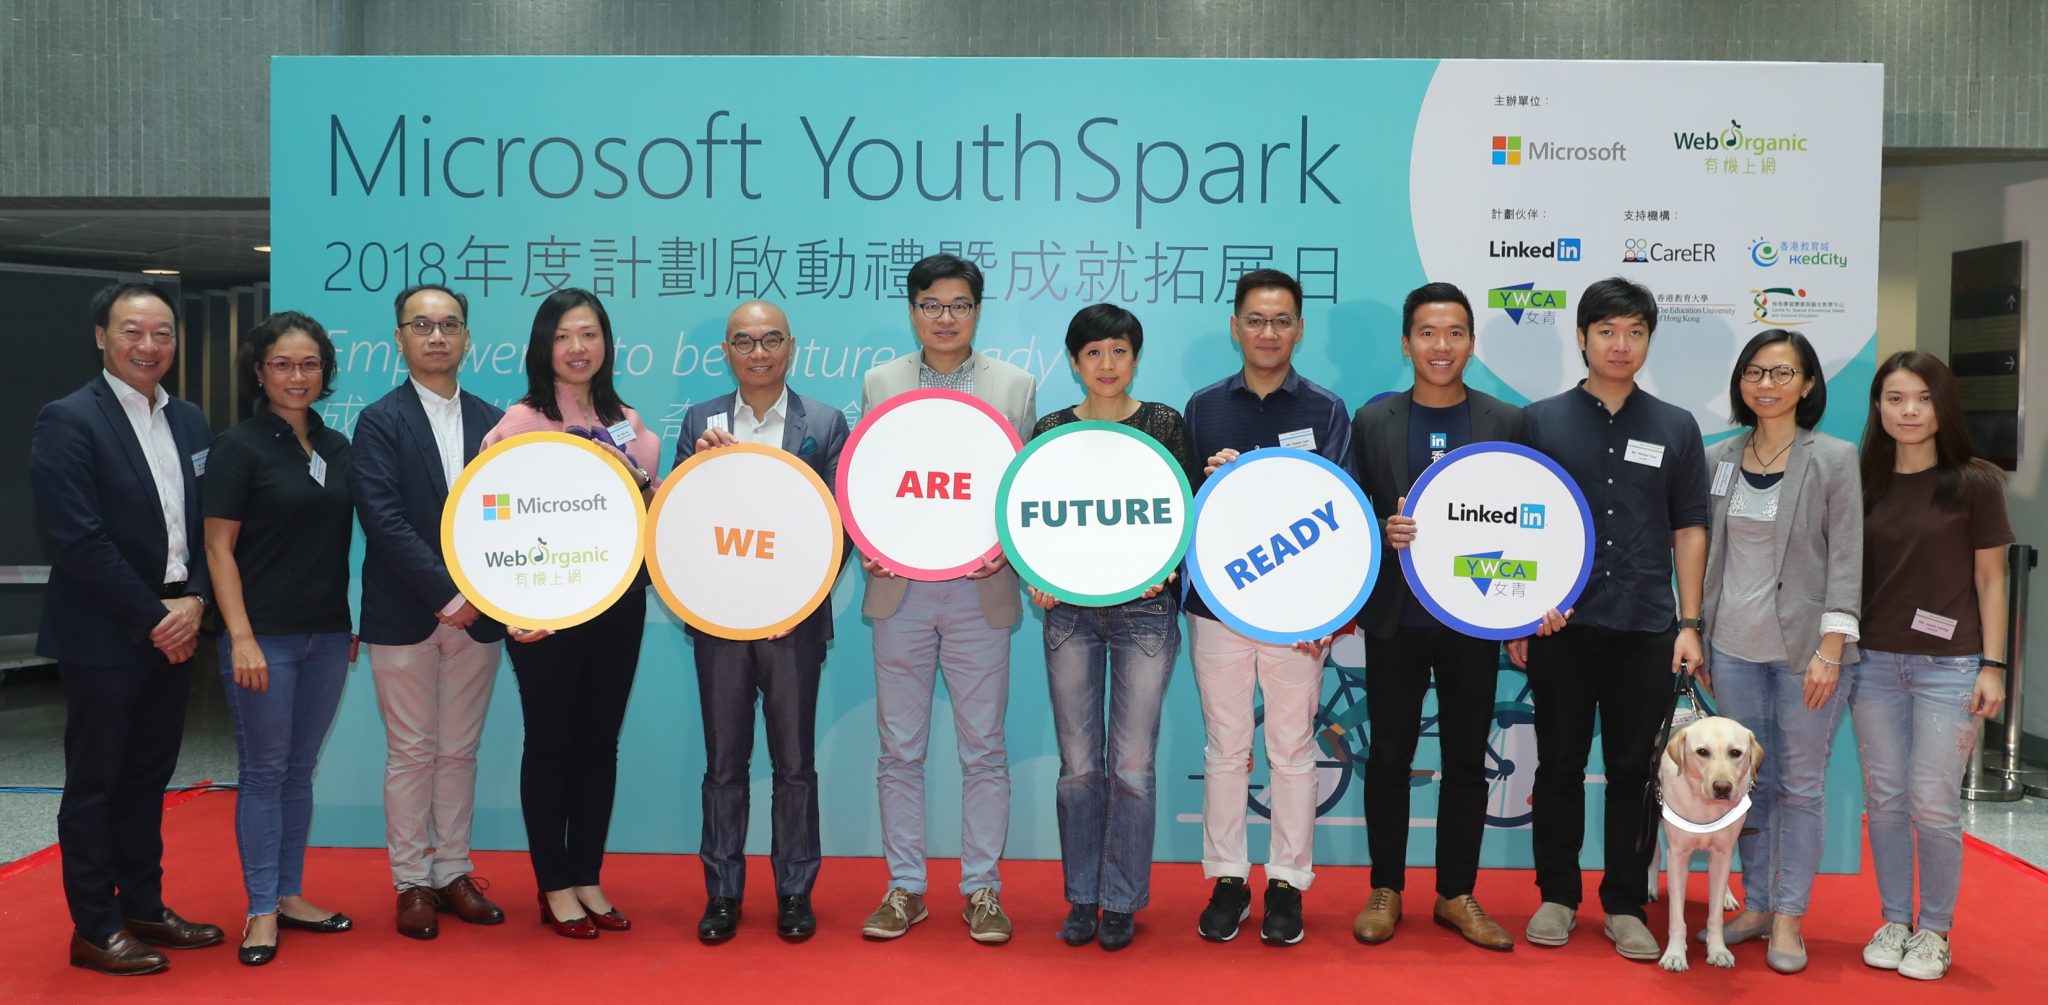 Microsoft to impart digital skills into 10 million youths